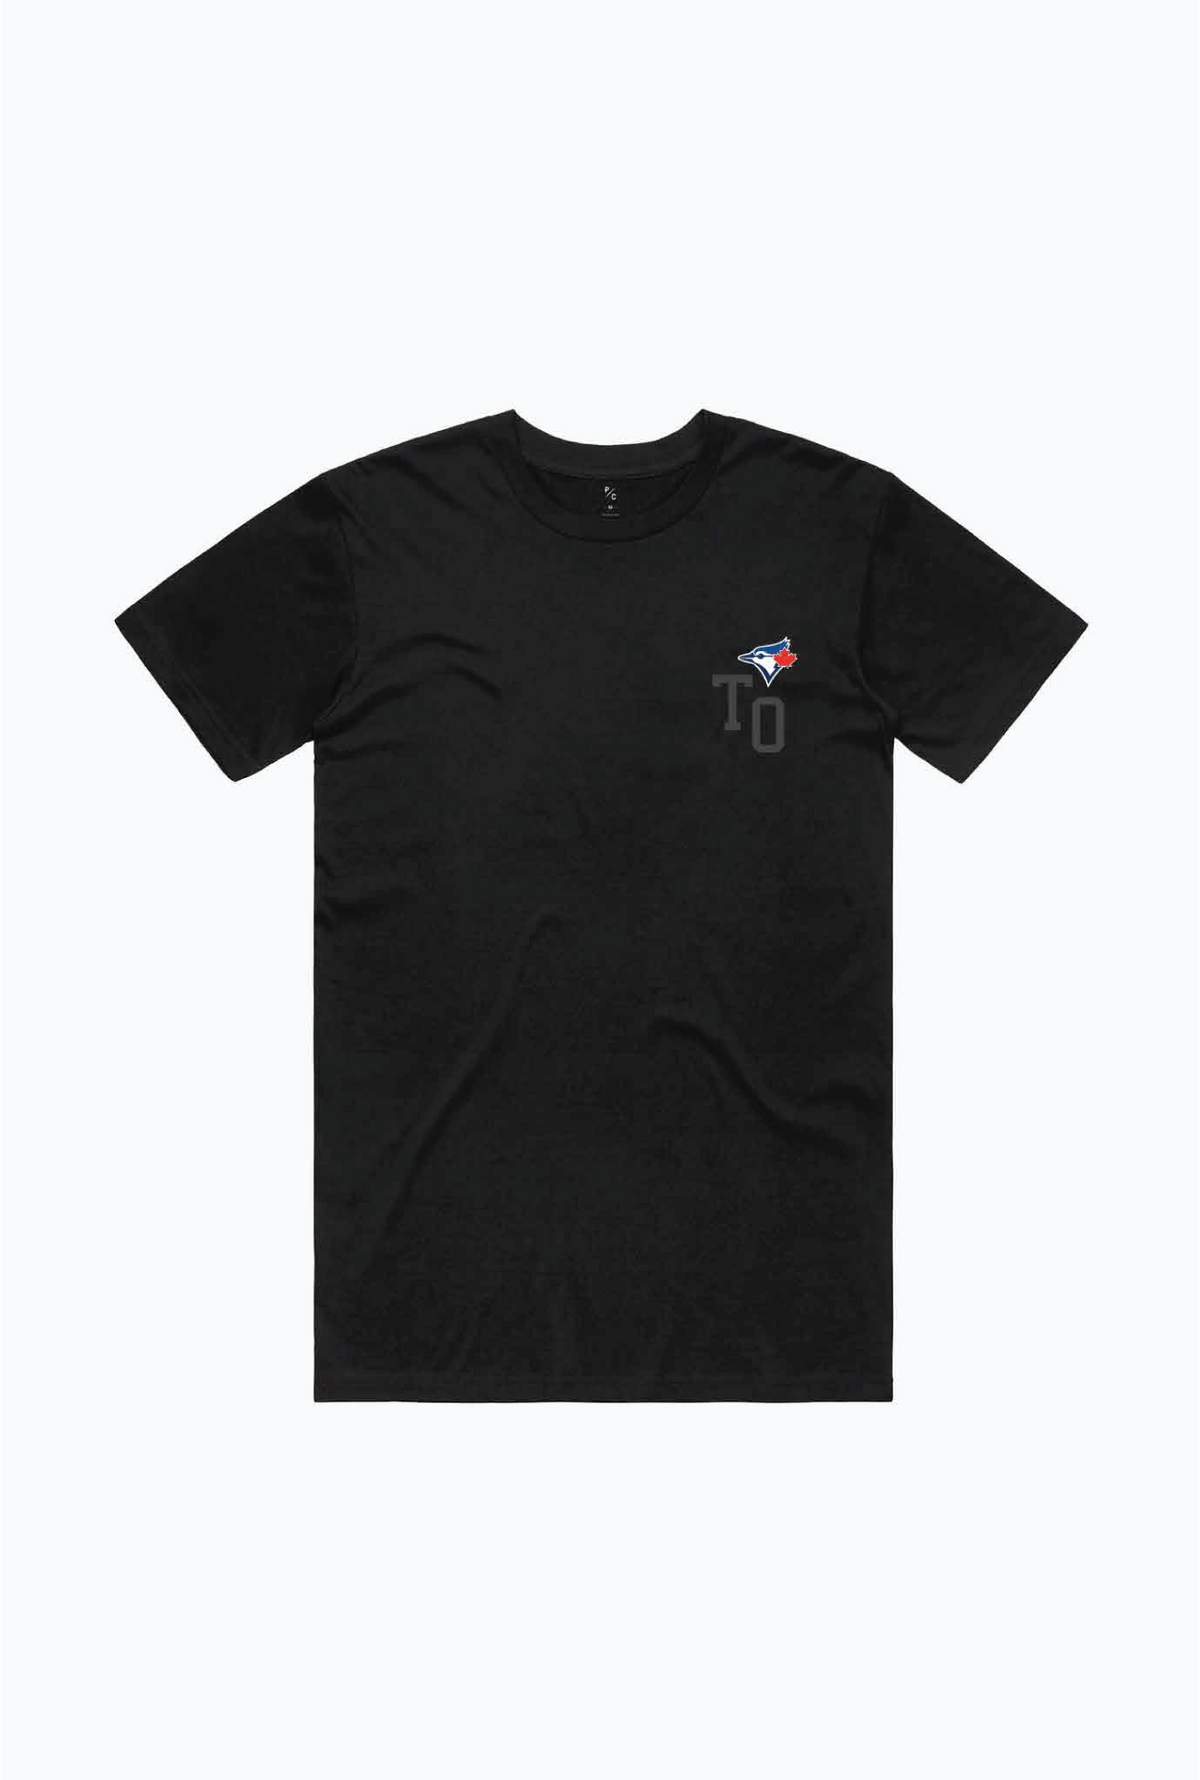 Final Sale - Blue Jays™ TO T-Shirt - Tonal Black